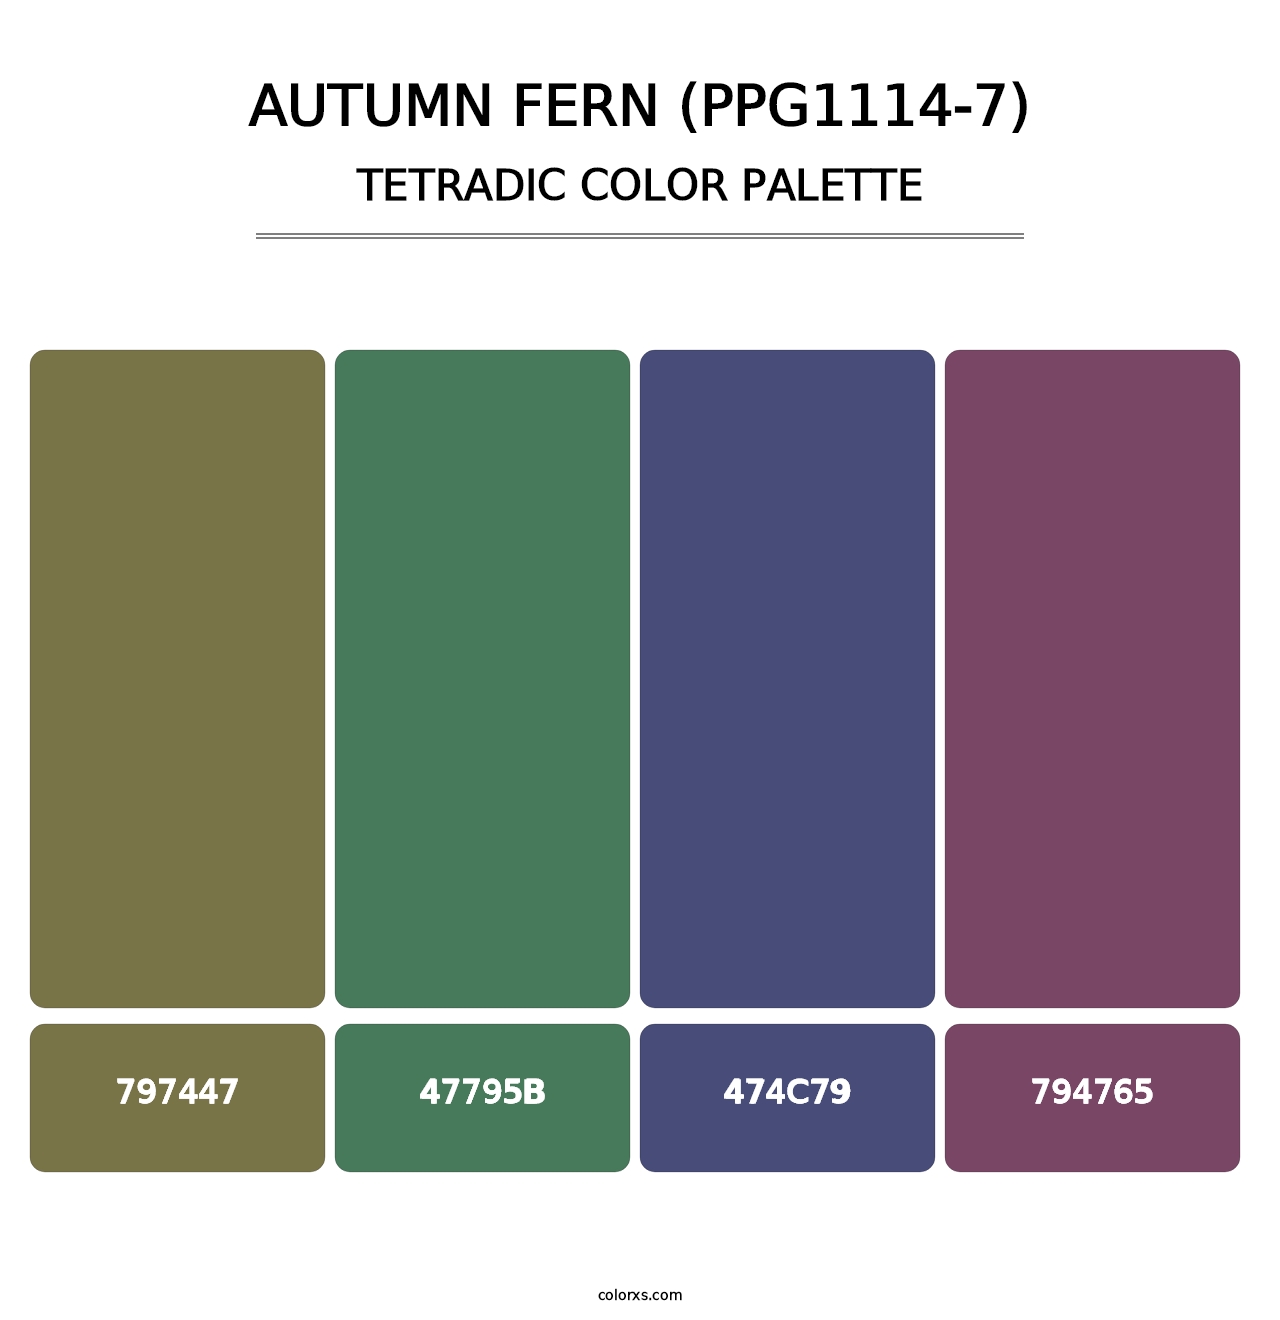 Autumn Fern (PPG1114-7) - Tetradic Color Palette